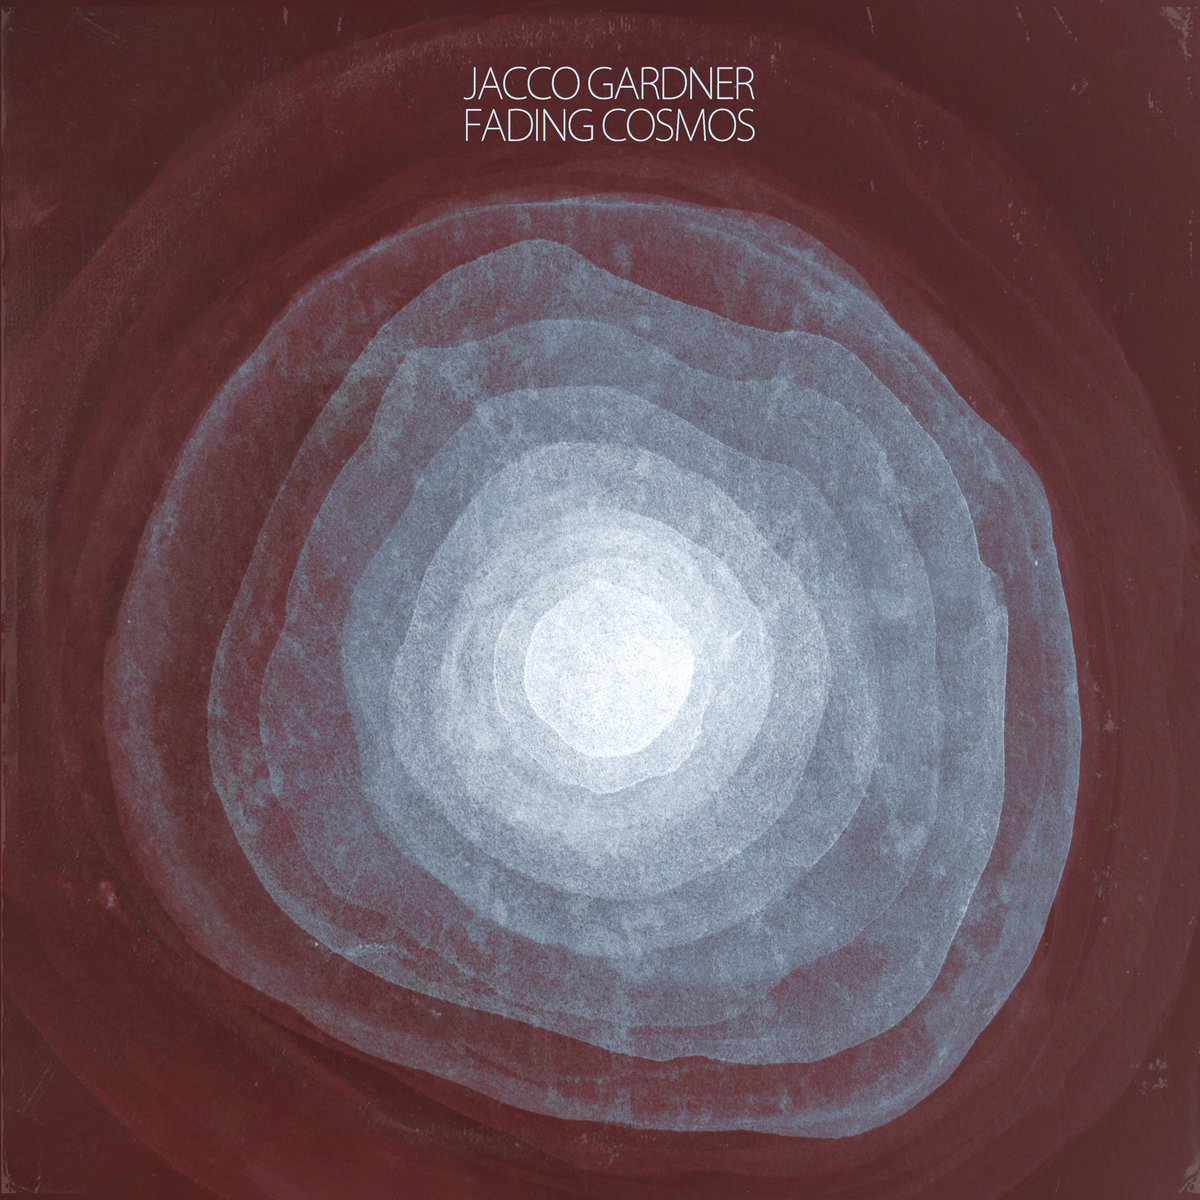 Jacco Gardner "Fading cosmos" EP